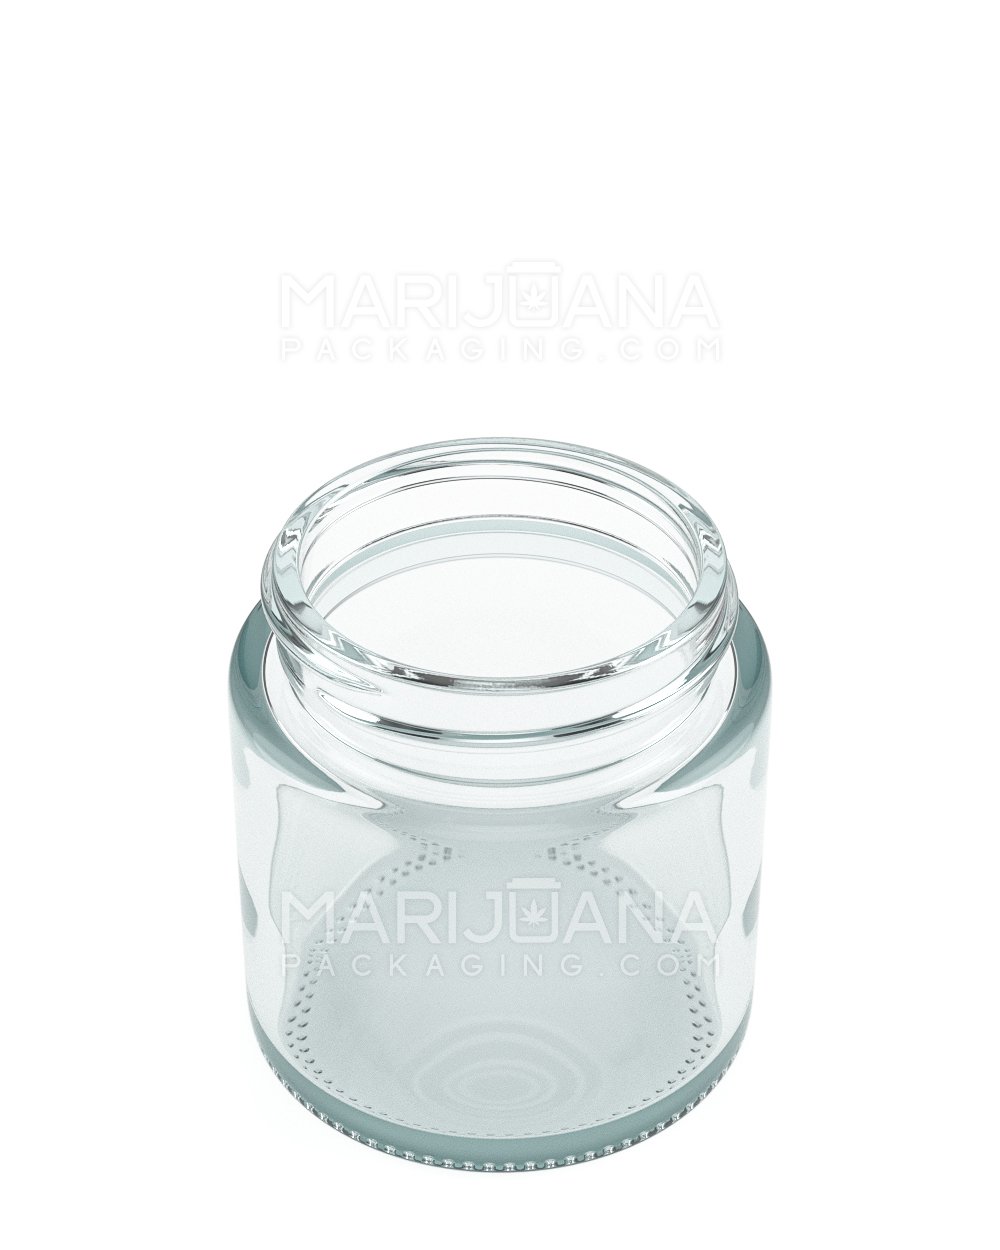 9 oz Straight Sided Glass Jar Retail Box